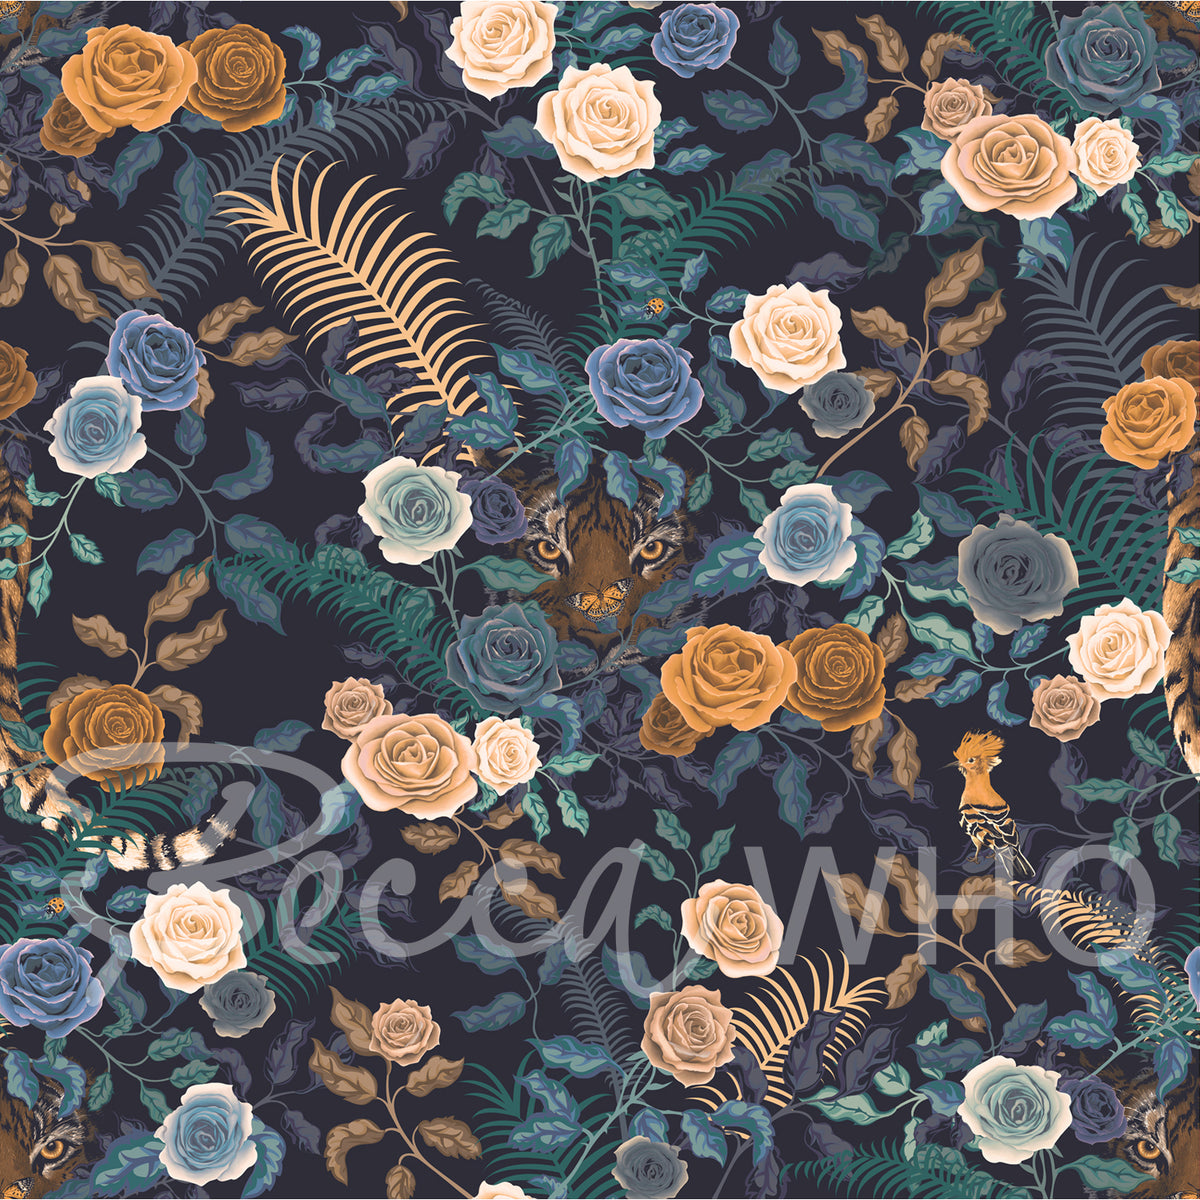 Full artwork of Bengal Rose Garden dark floral wallpaper by Becca Who